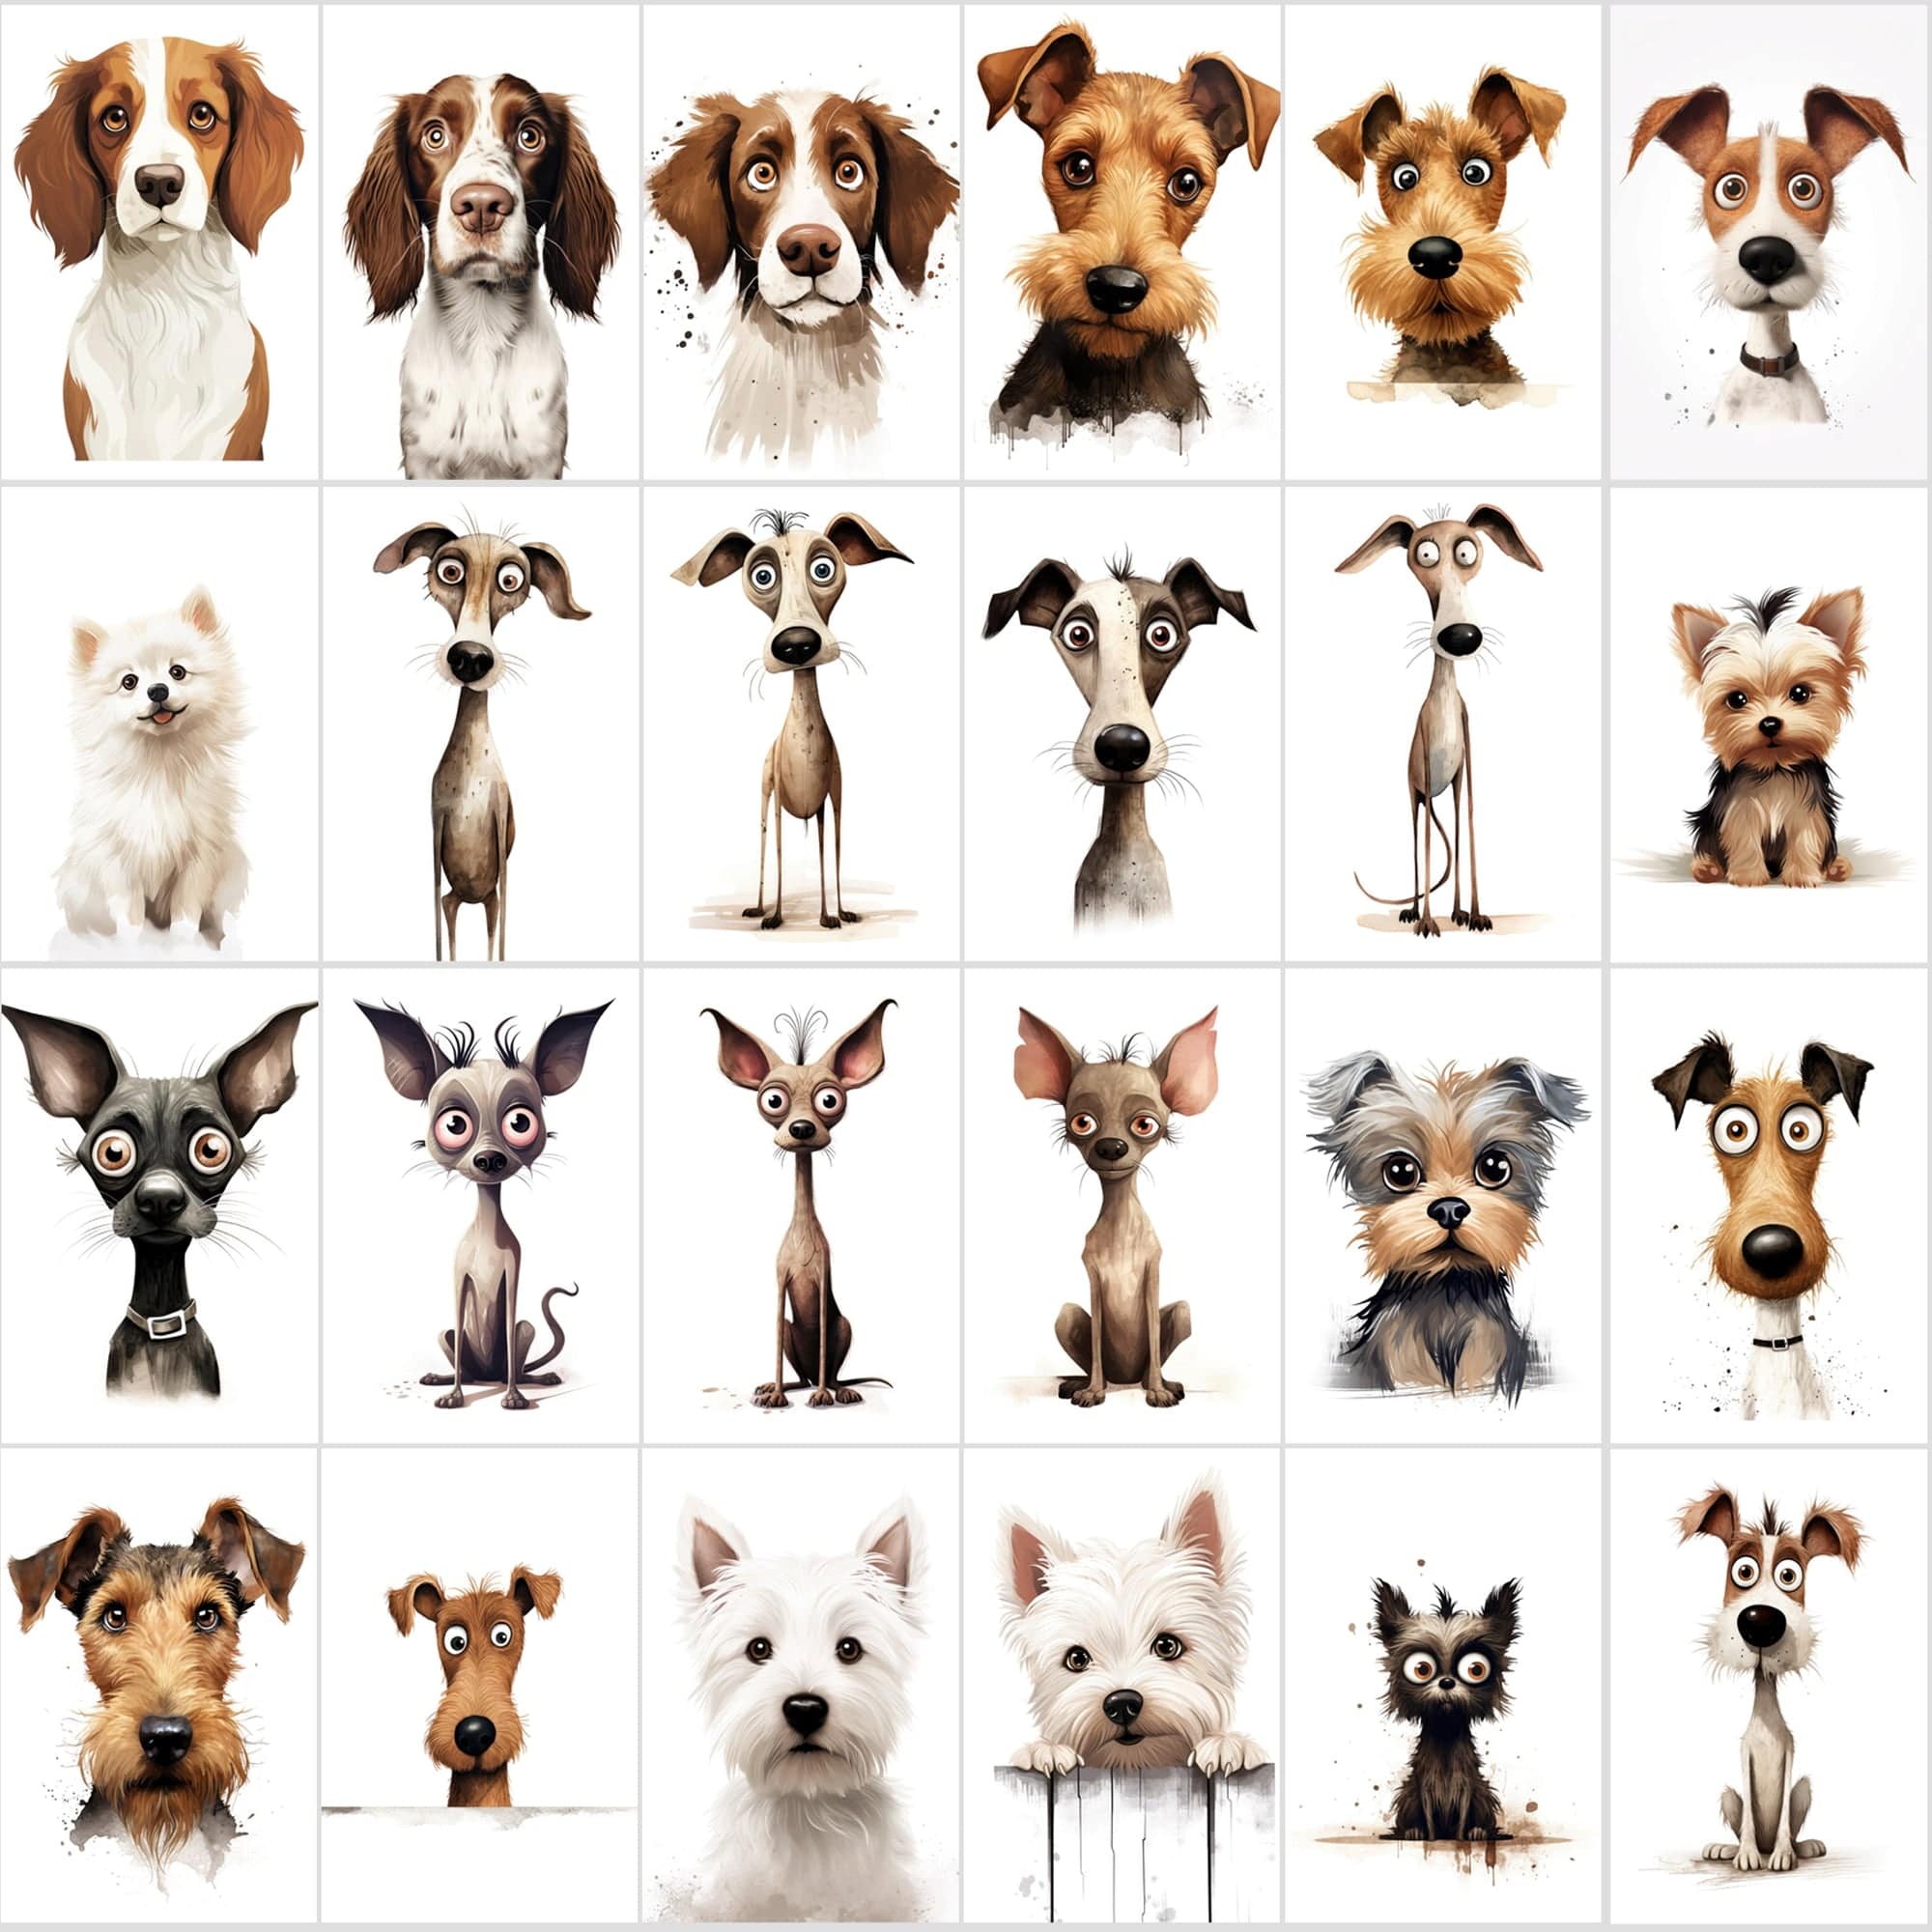 780 Funny Scared Dog Images Collection - High-Resolution JPG & PNG, Commercial License Digital Download Sumobundle